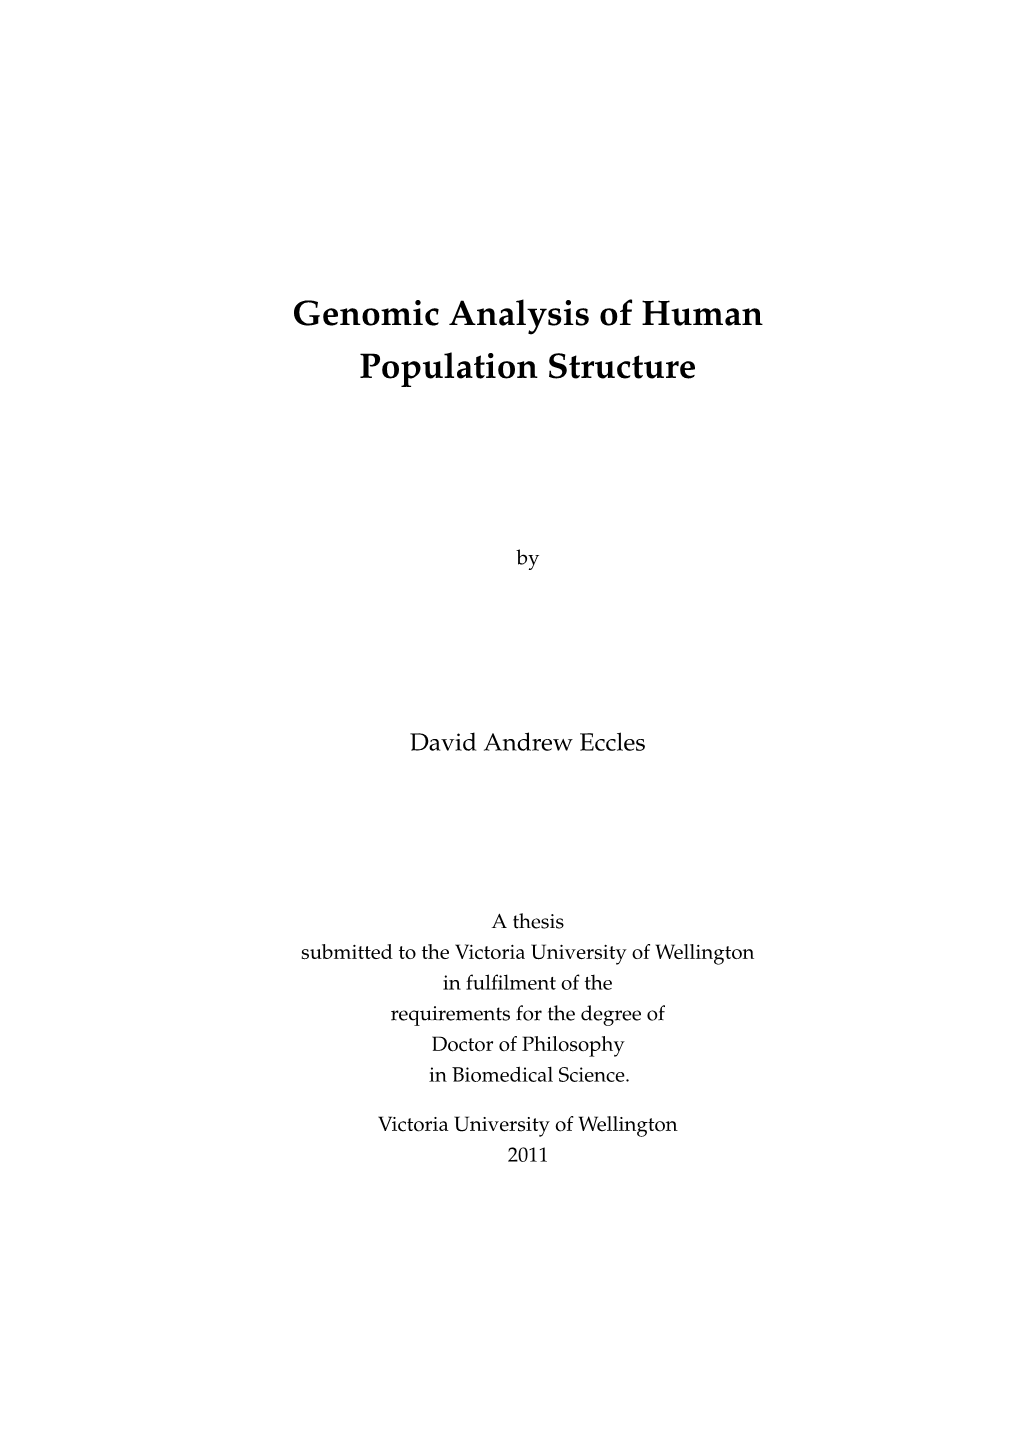 Genomic Analysis of Human Population Structure